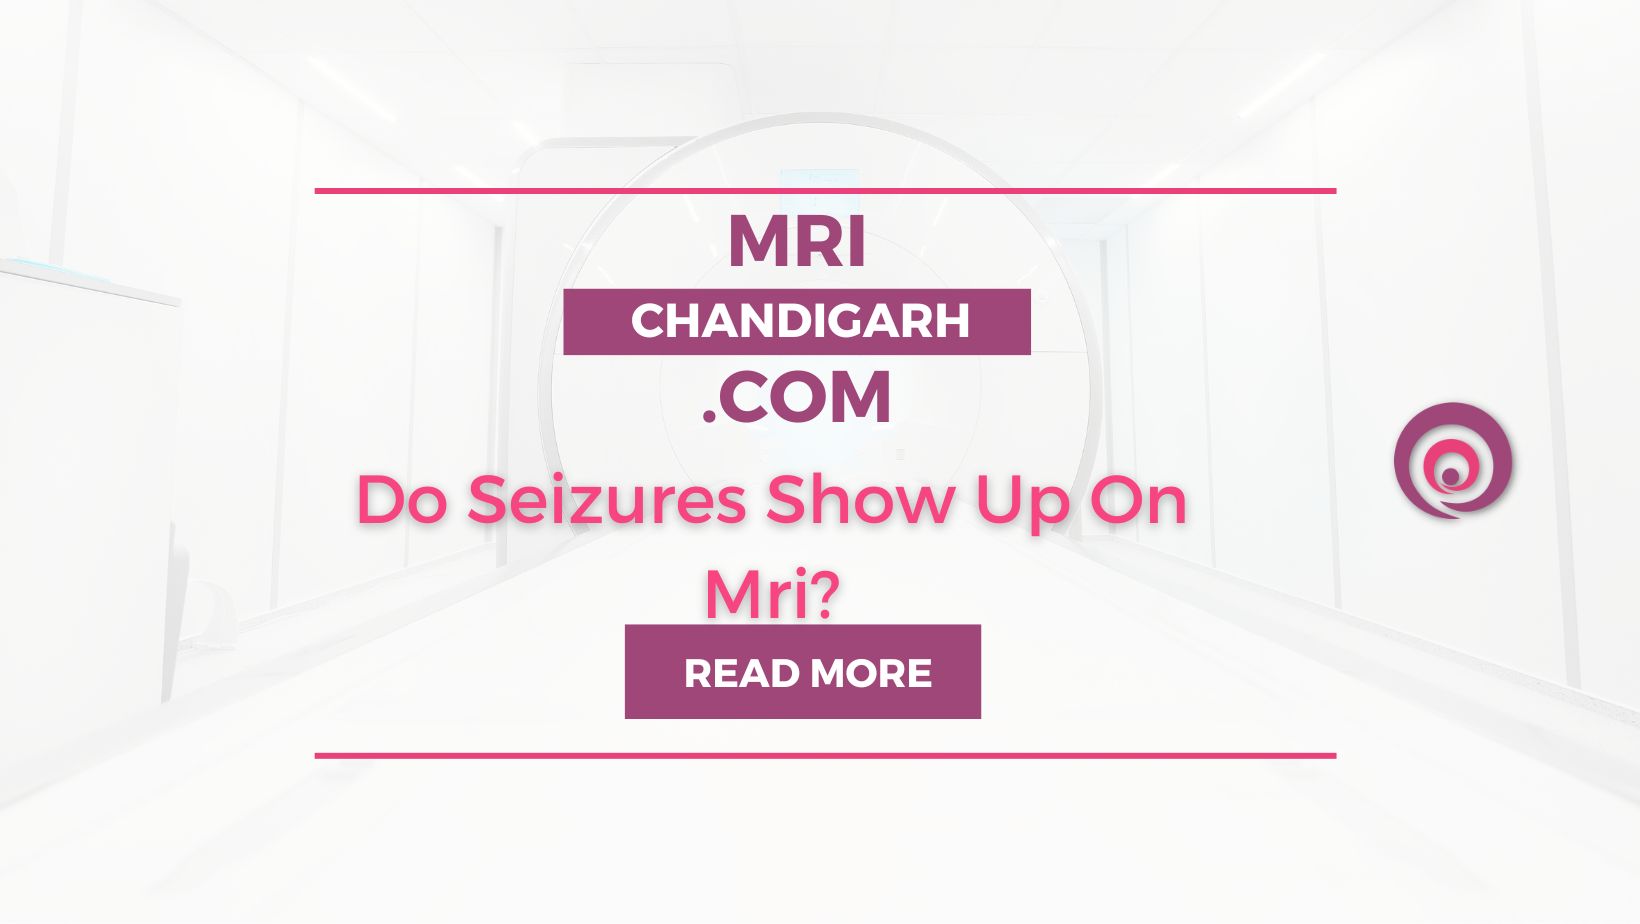 Do Seizures Show Up On Mri?